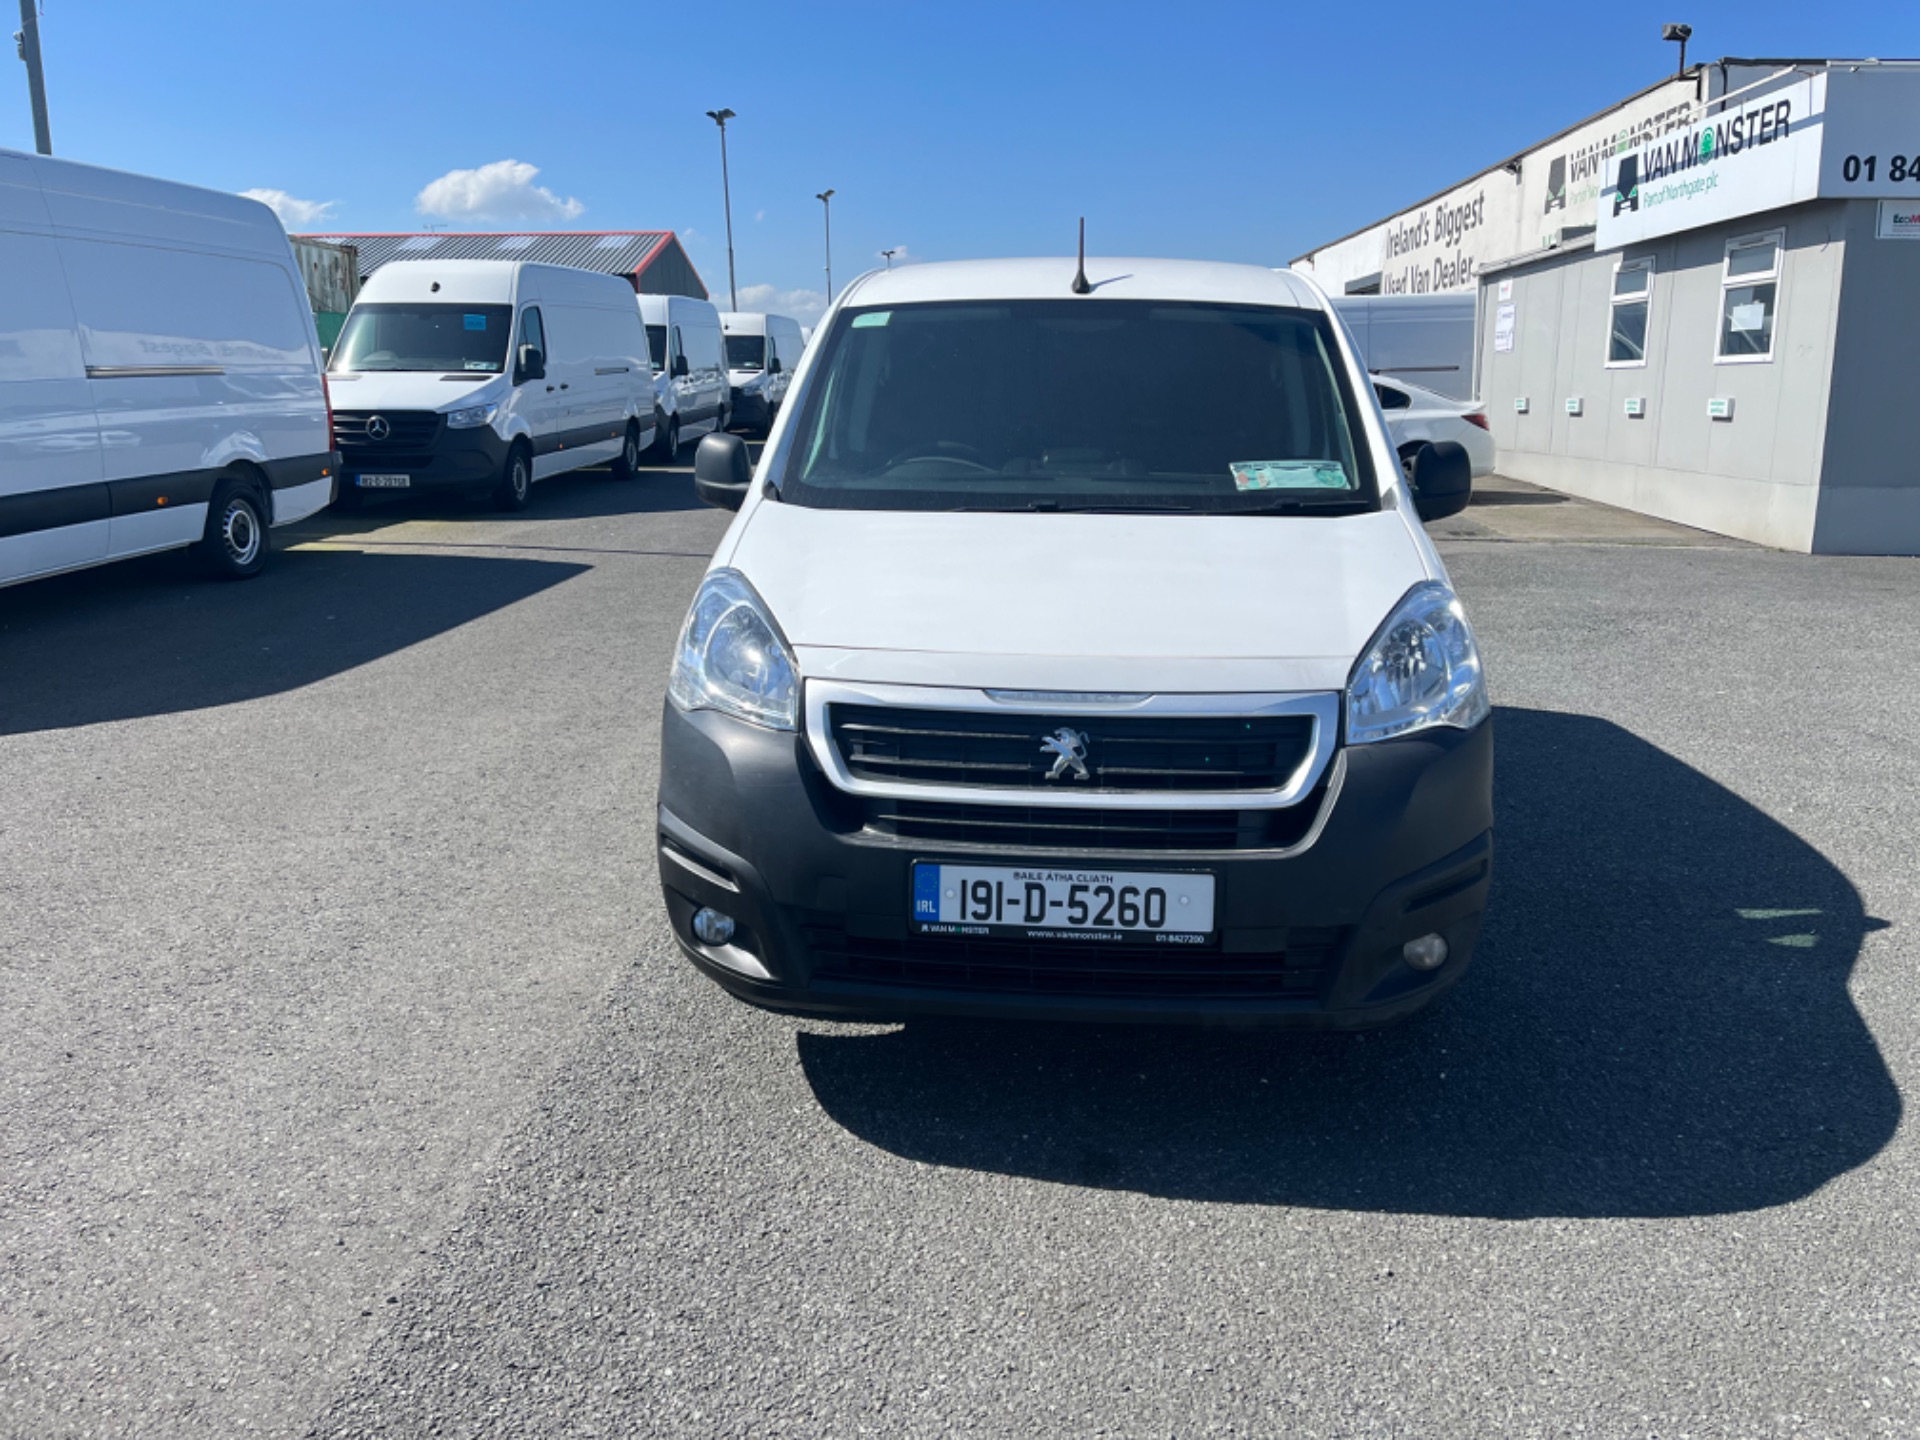 2019 Peugeot Partner Professional 1.6 Blue HDI 75 3 (191D5260) Thumbnail 1